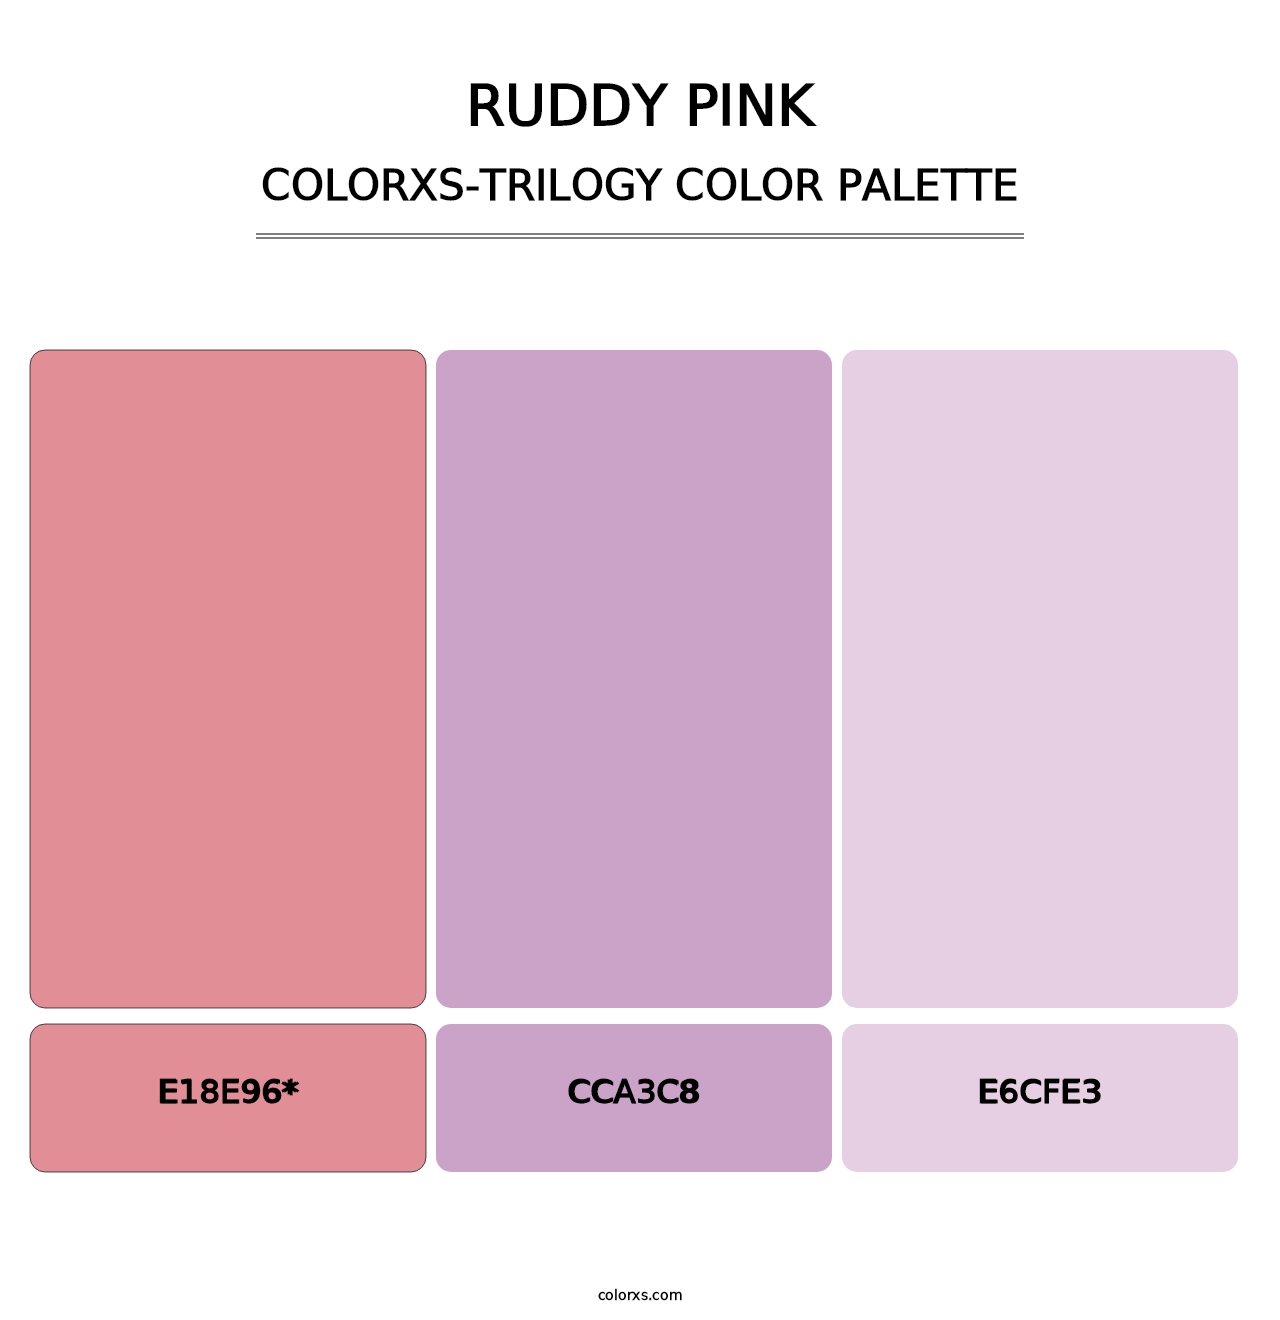 Ruddy Pink - Colorxs Trilogy Palette